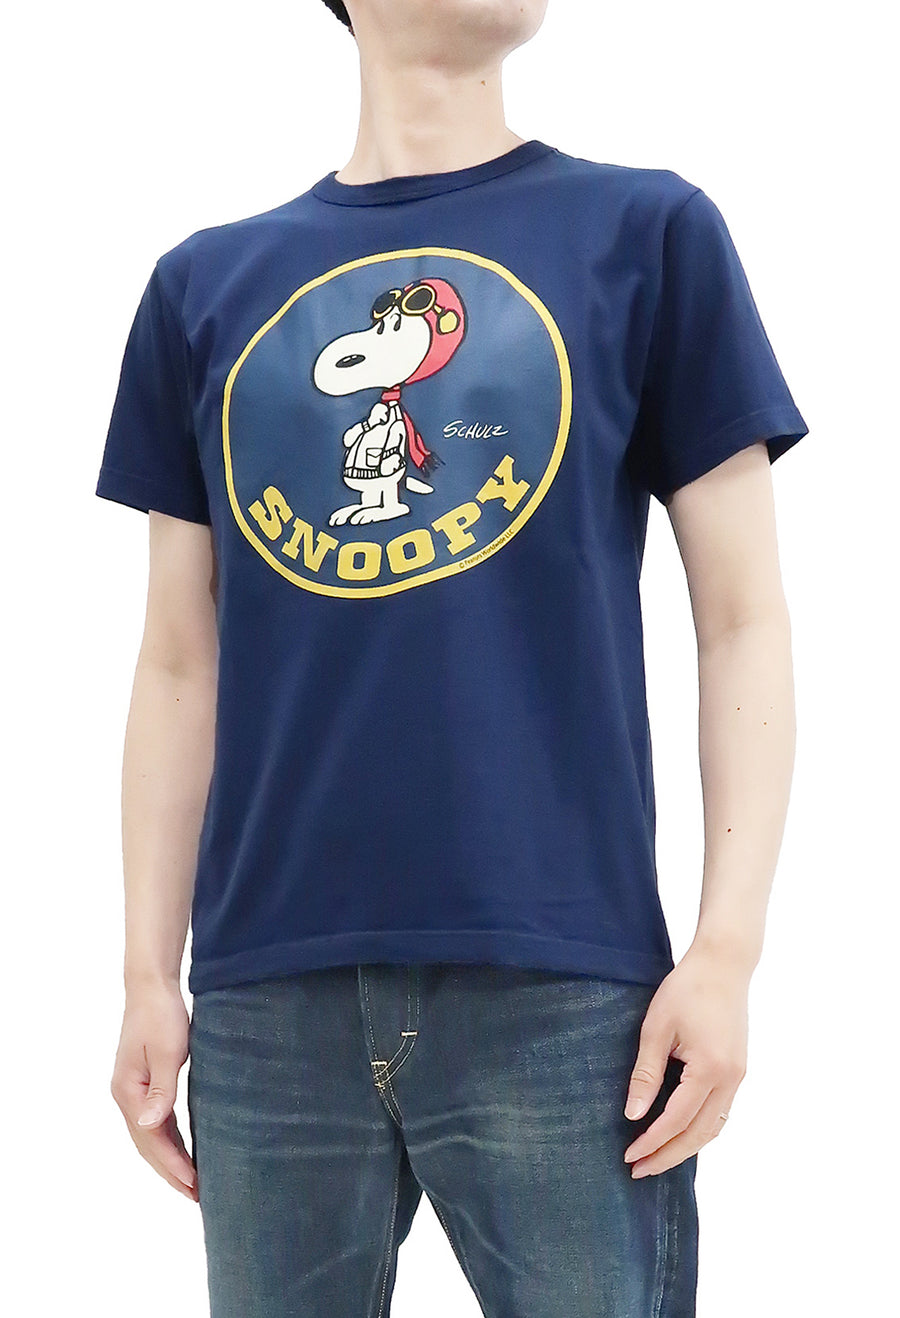 Buzz Rickson T-shirt Men's Snoopy Graphic Short Sleeve Loopwheeled Tee BR79049 128 Dark-Blue